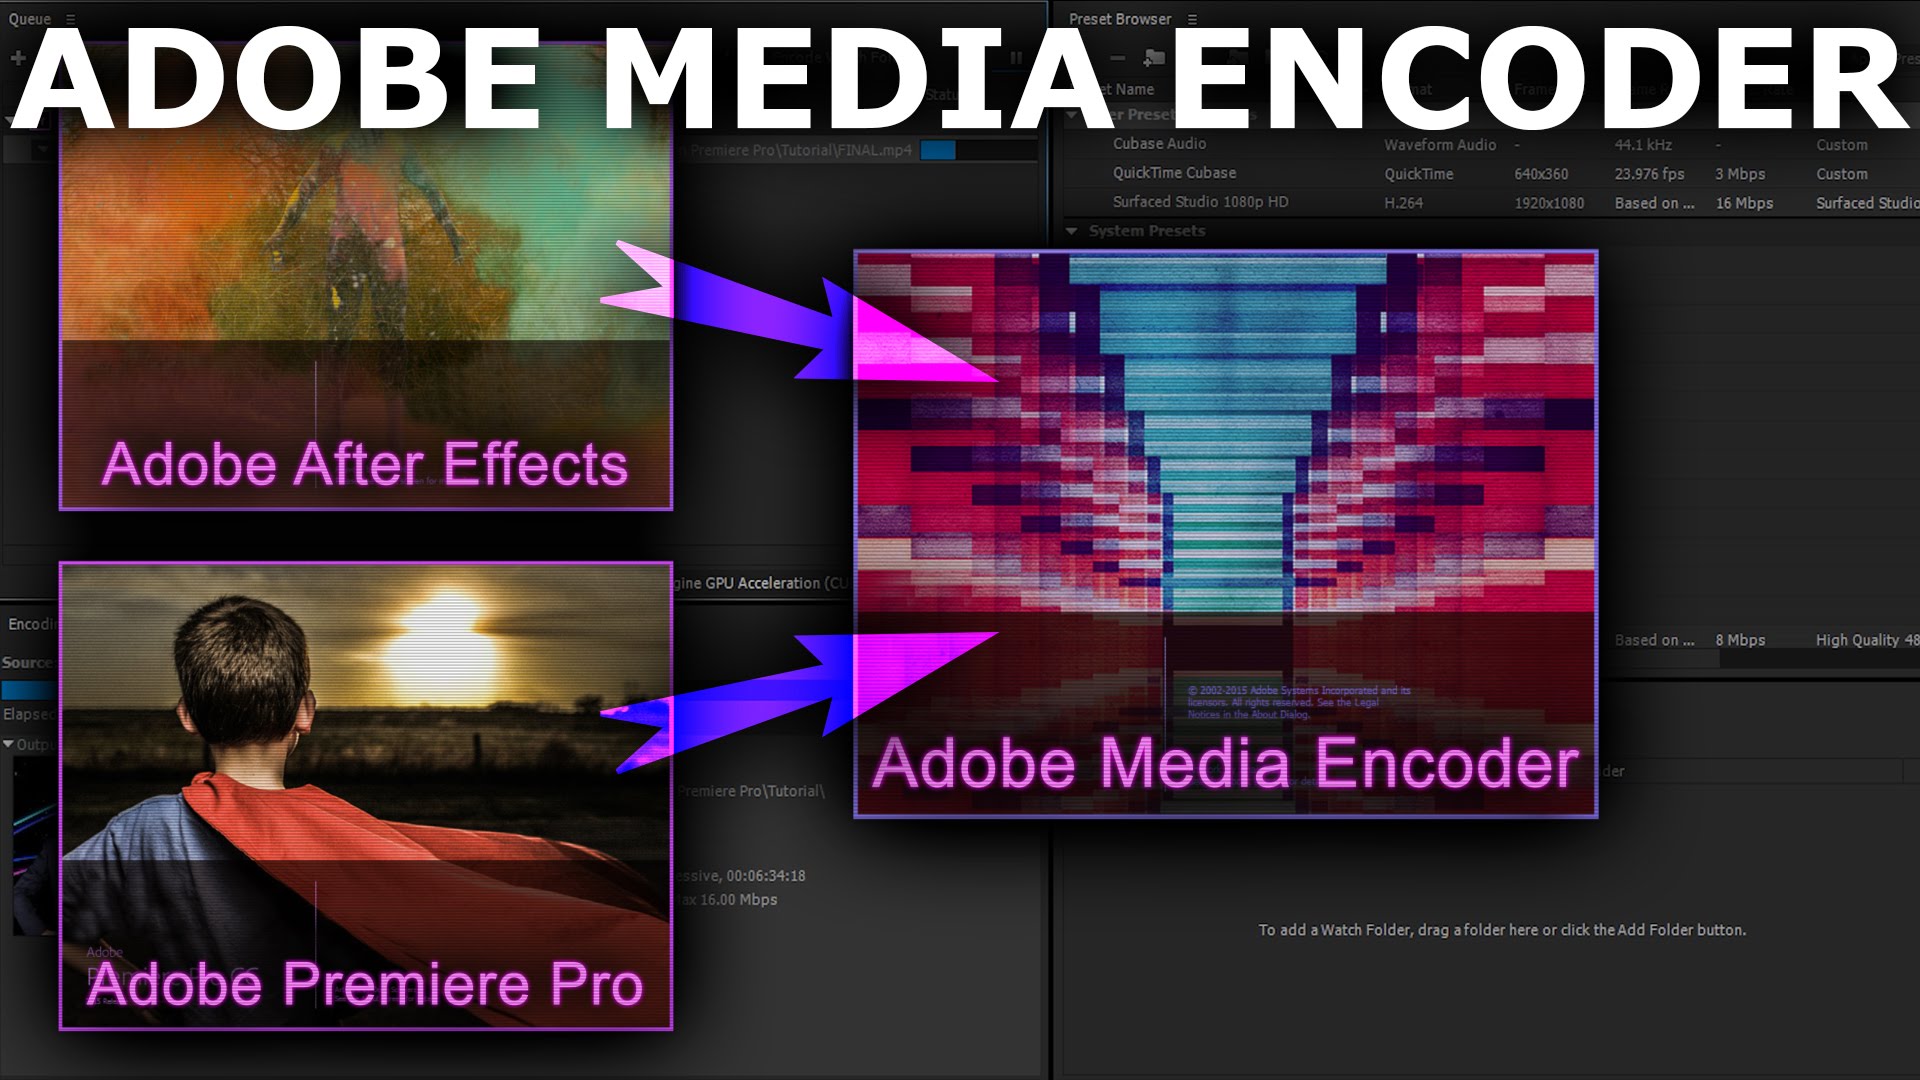 Adobe media encoder download free 2020